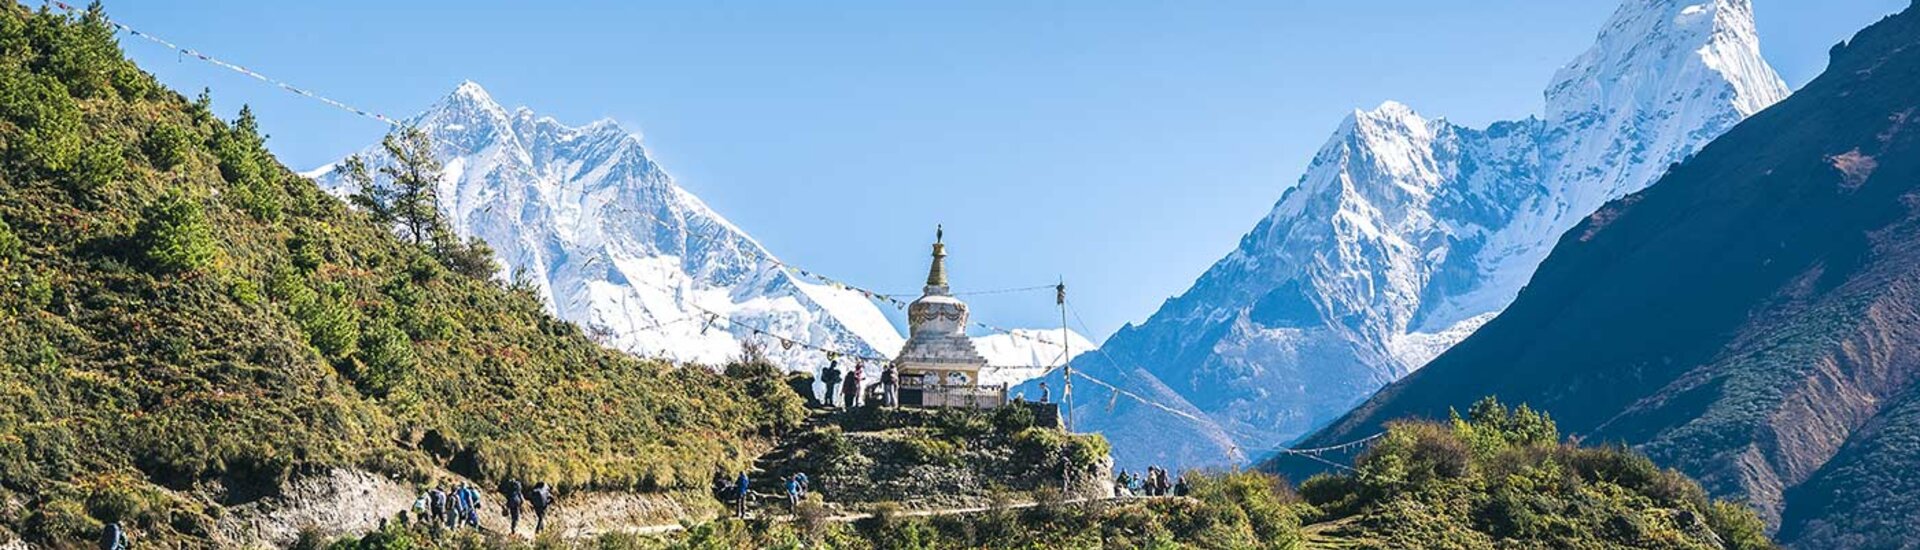 Namche Bazaar: Buddhistische Stupa im Khumbu Tal